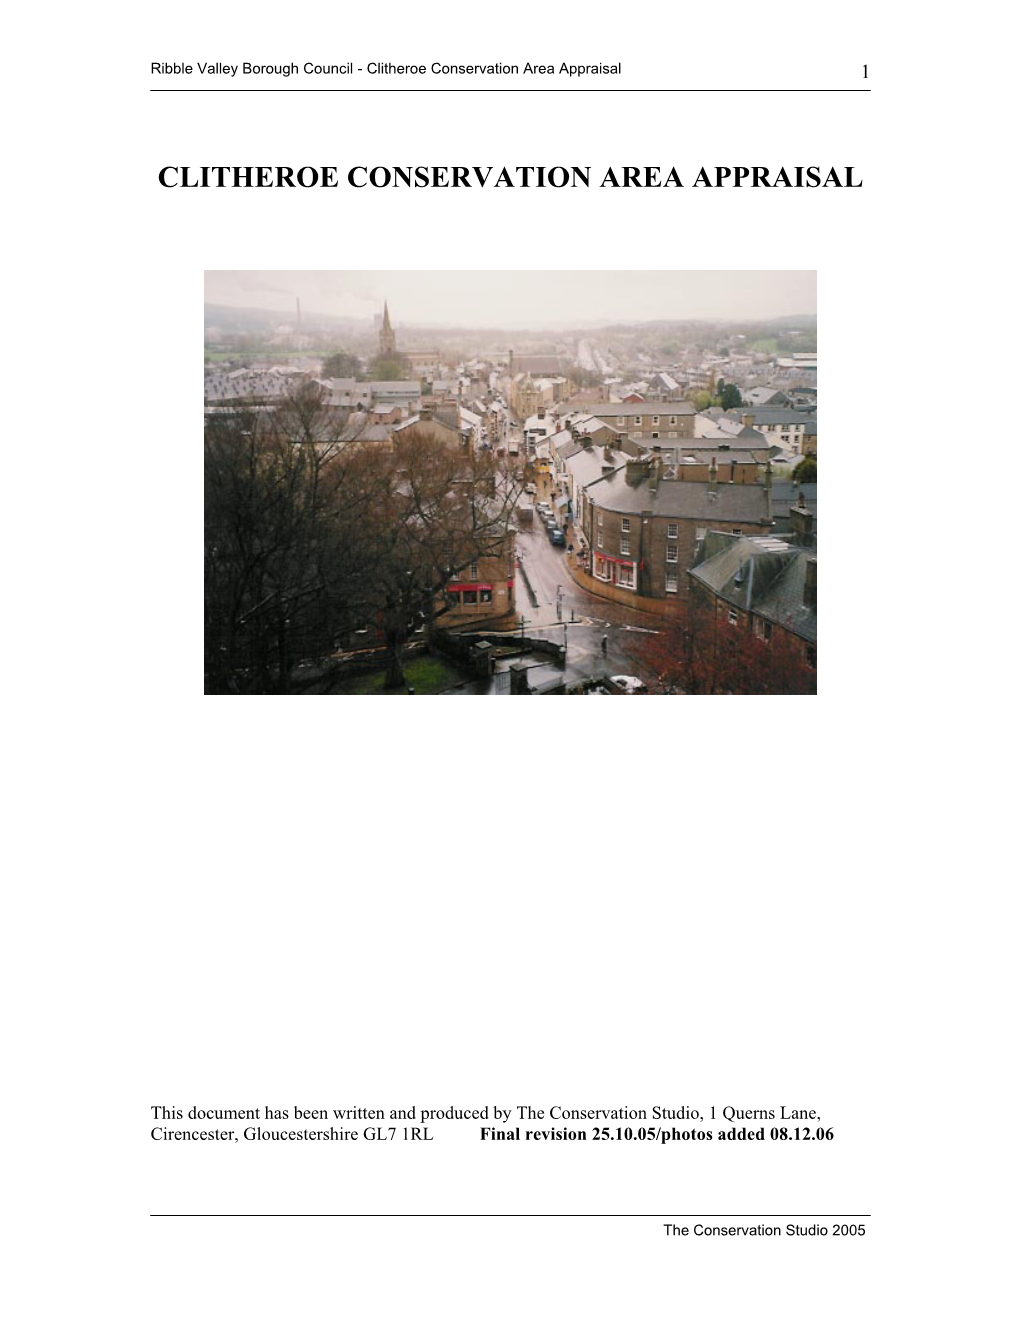 Clitheroe Conservation Area Appraisal 1